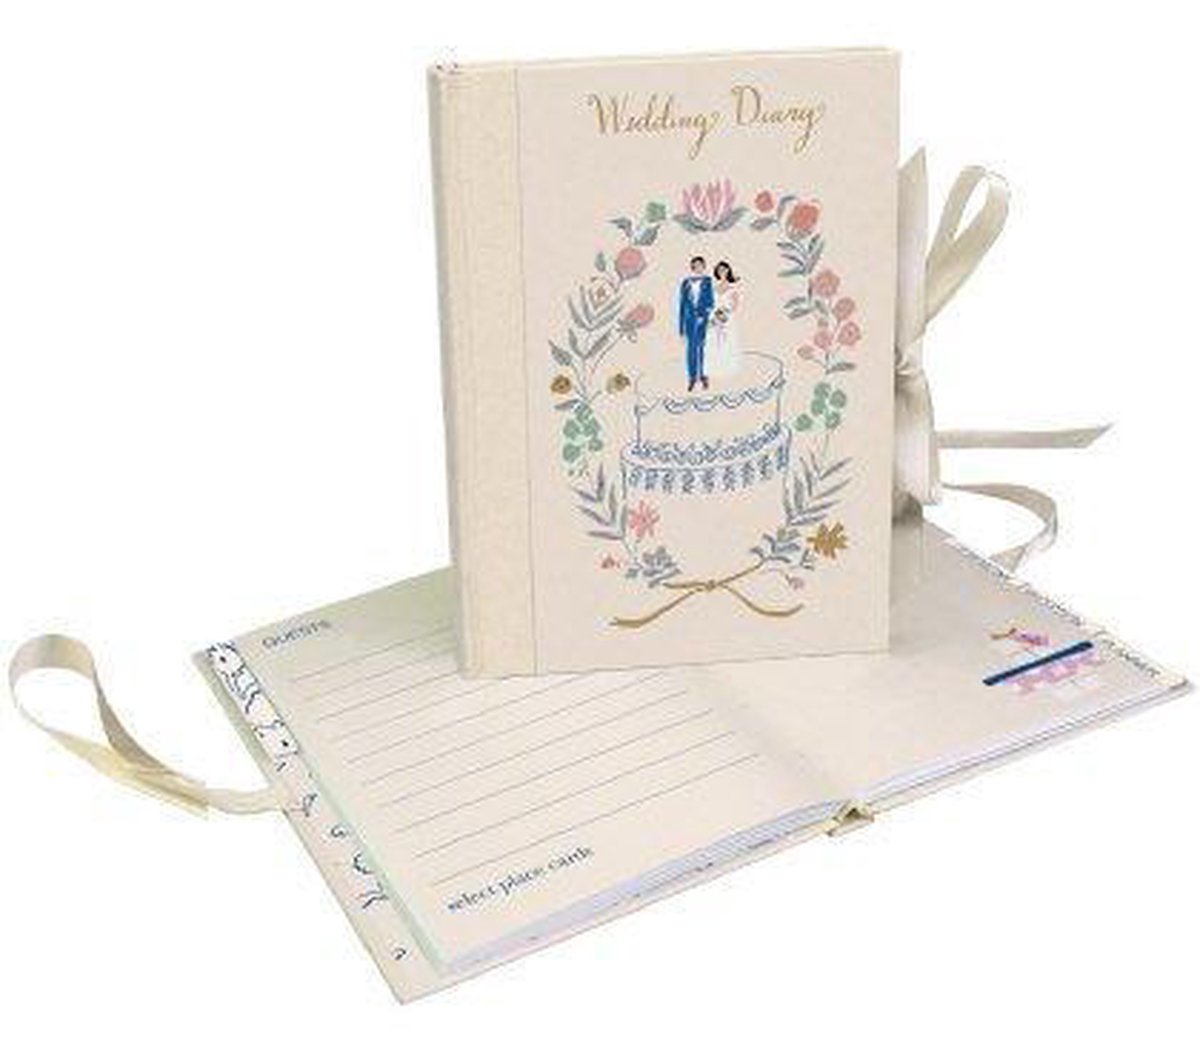 Cake Topper Wedding Diary (A5W 029)